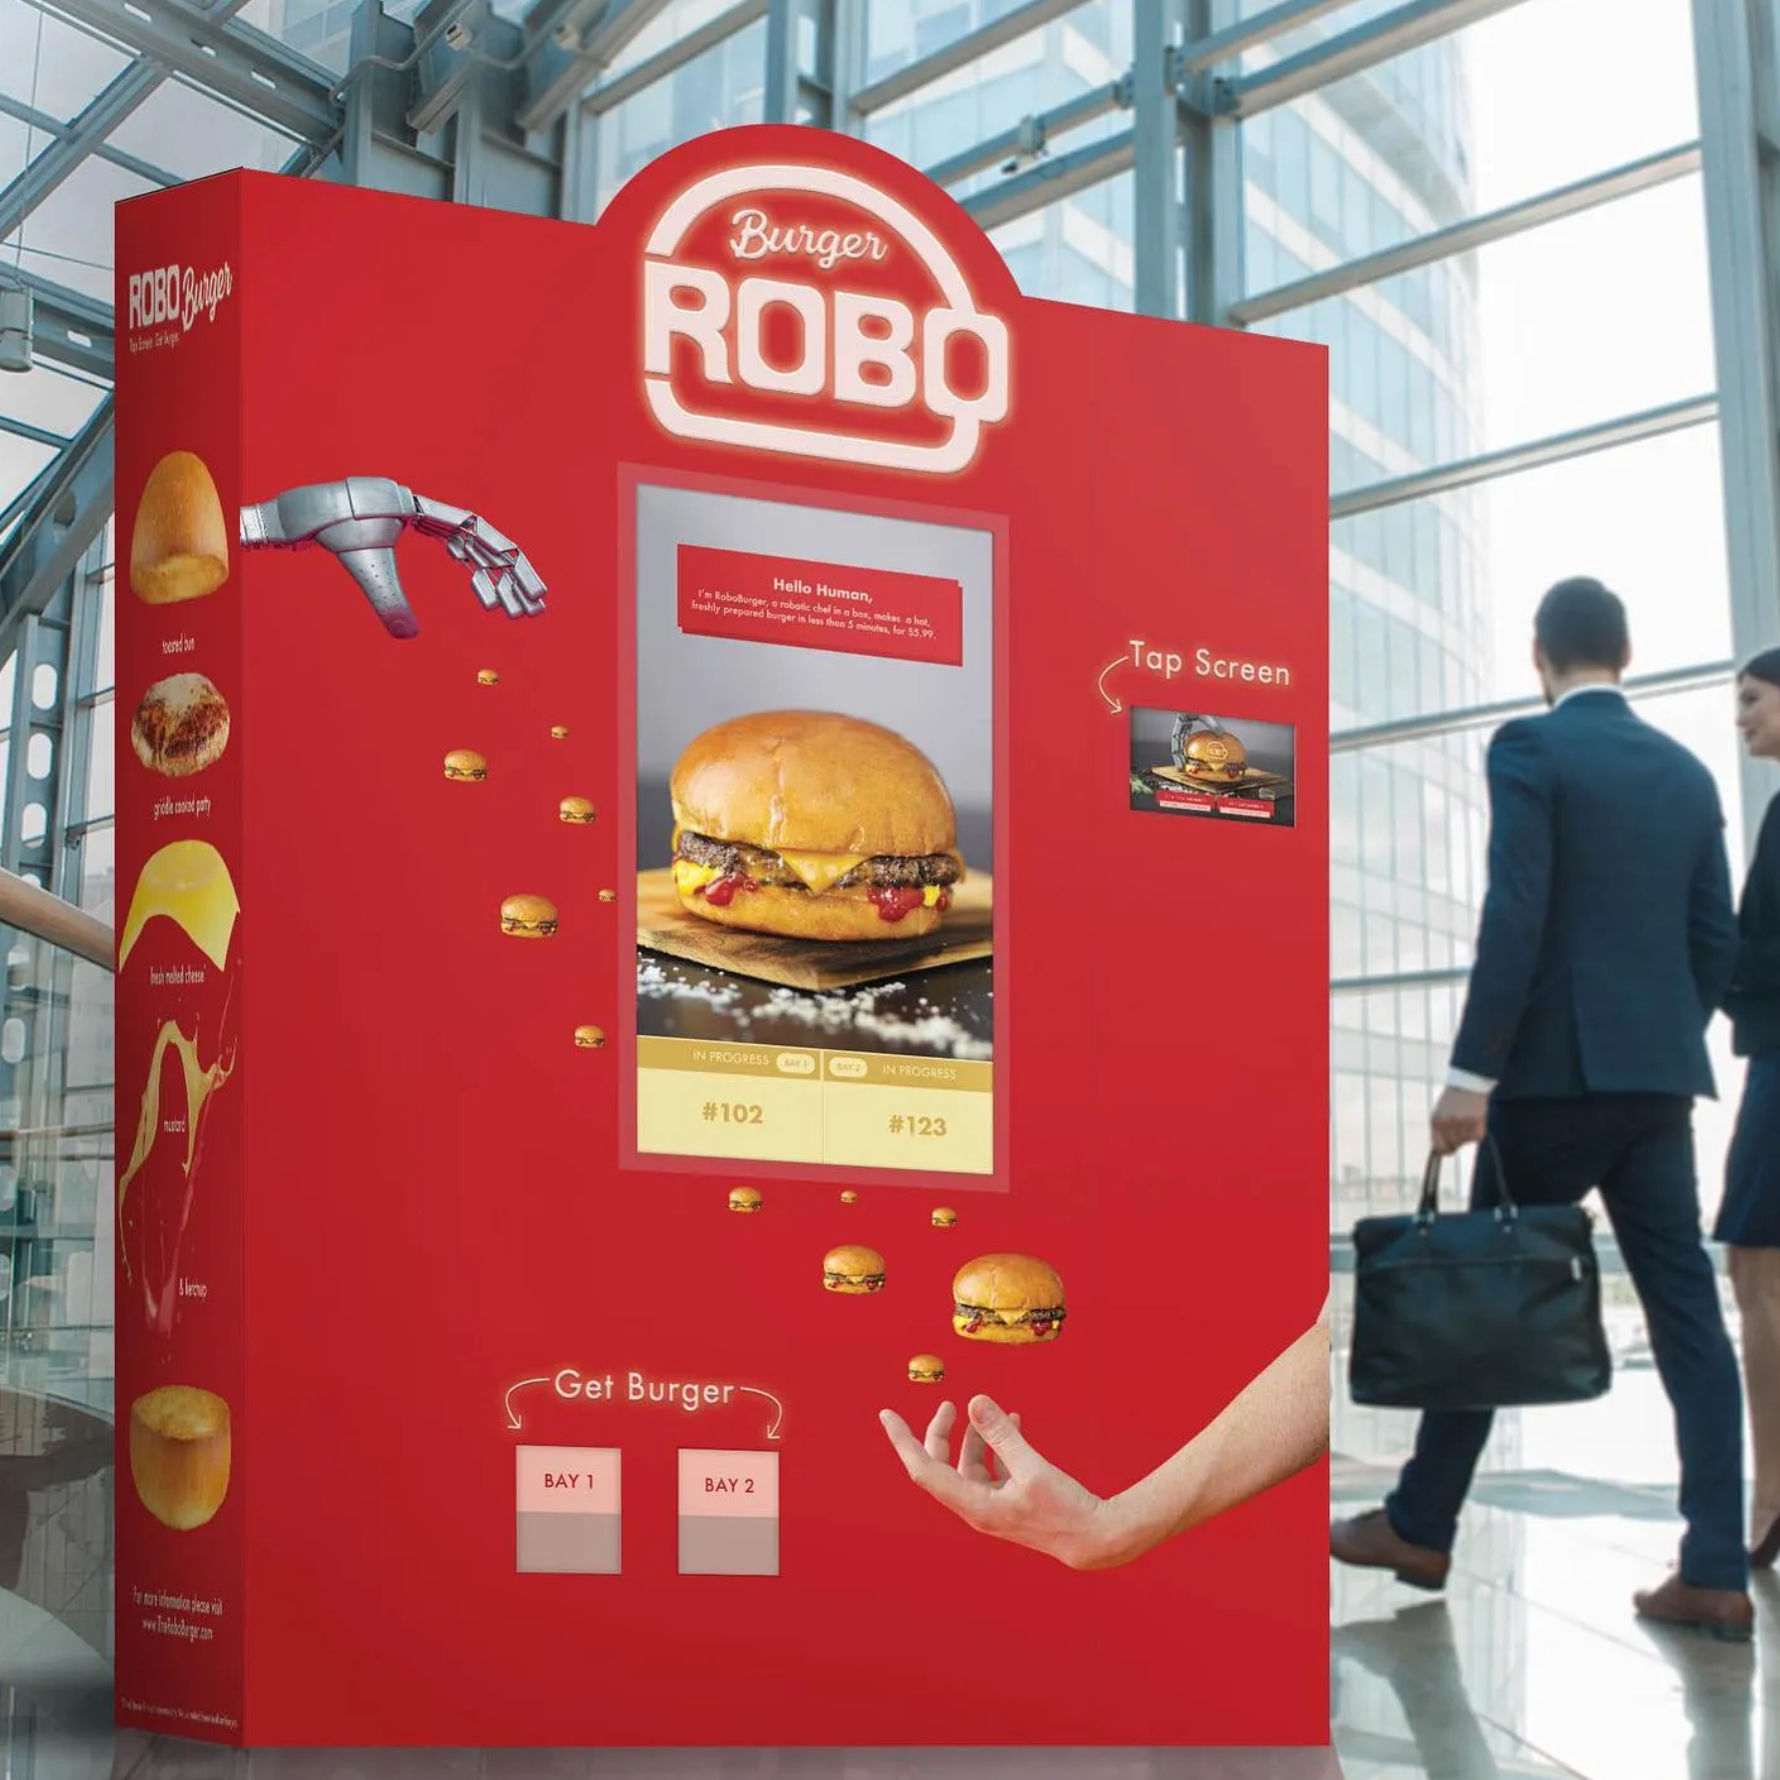 roboburger robot vending machine